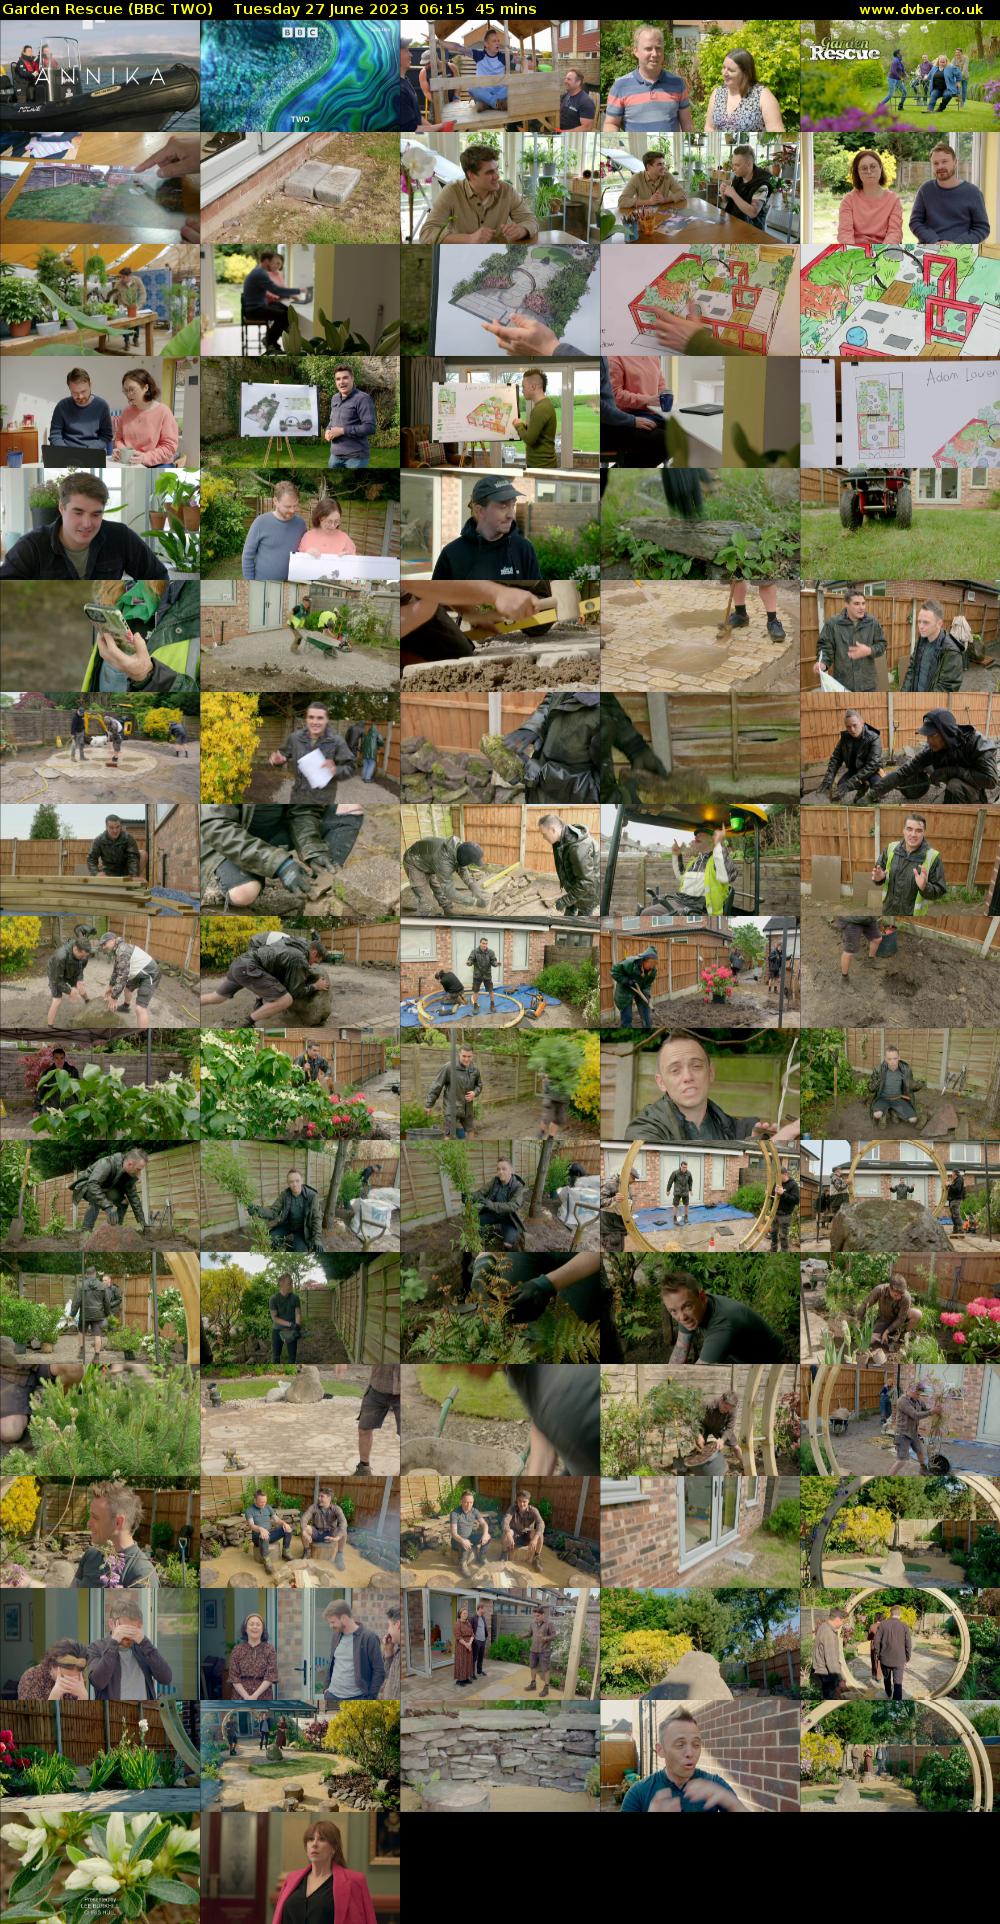 Garden Rescue (BBC TWO) Tuesday 27 June 2023 06:15 - 07:00